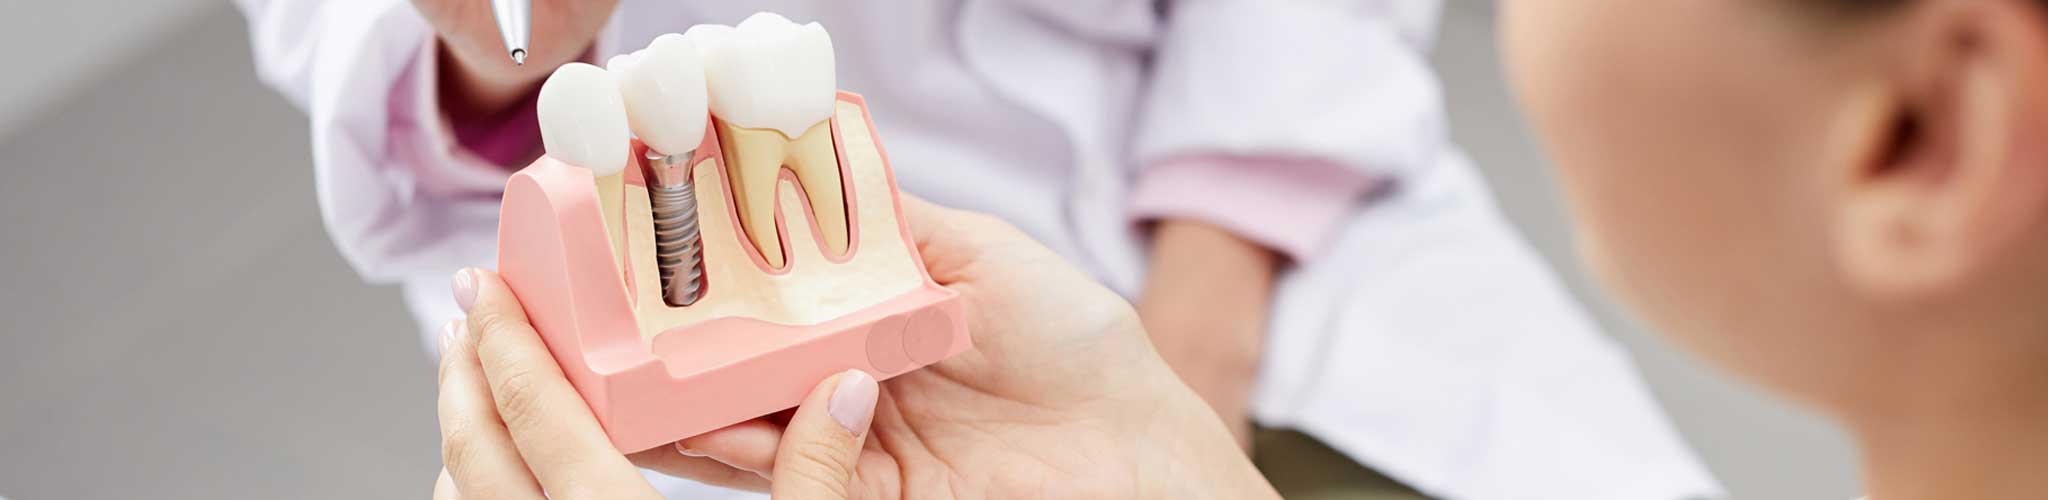 Dental Implants - DentisTree Dental Clinic